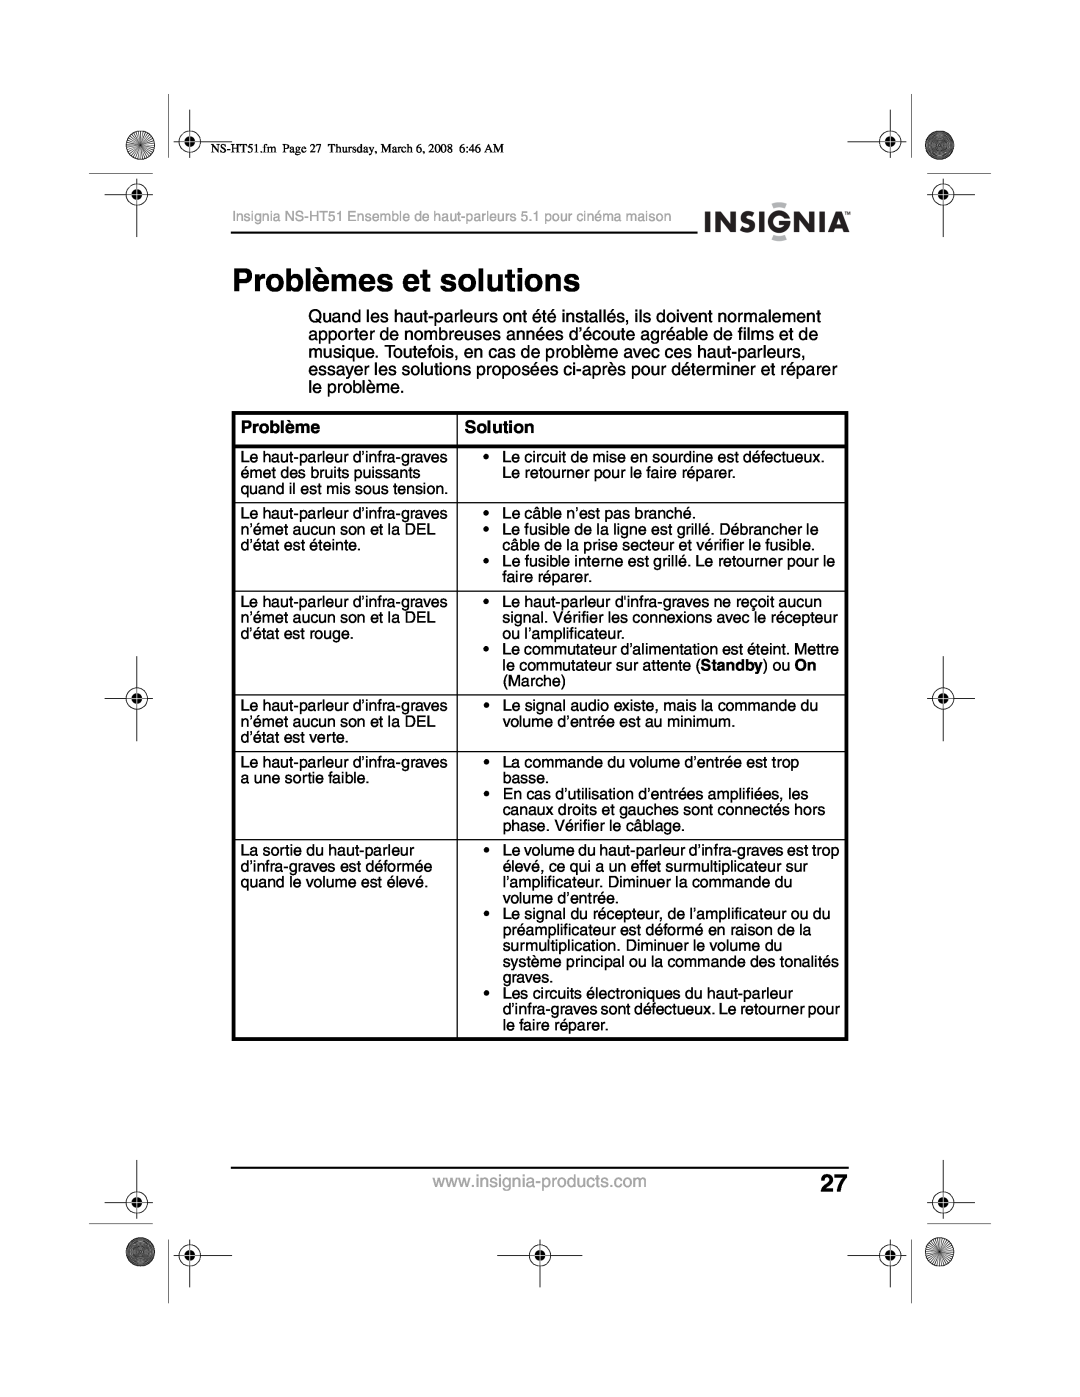 Insignia NS-HT51 manual Problèmes et solutions, Solution 